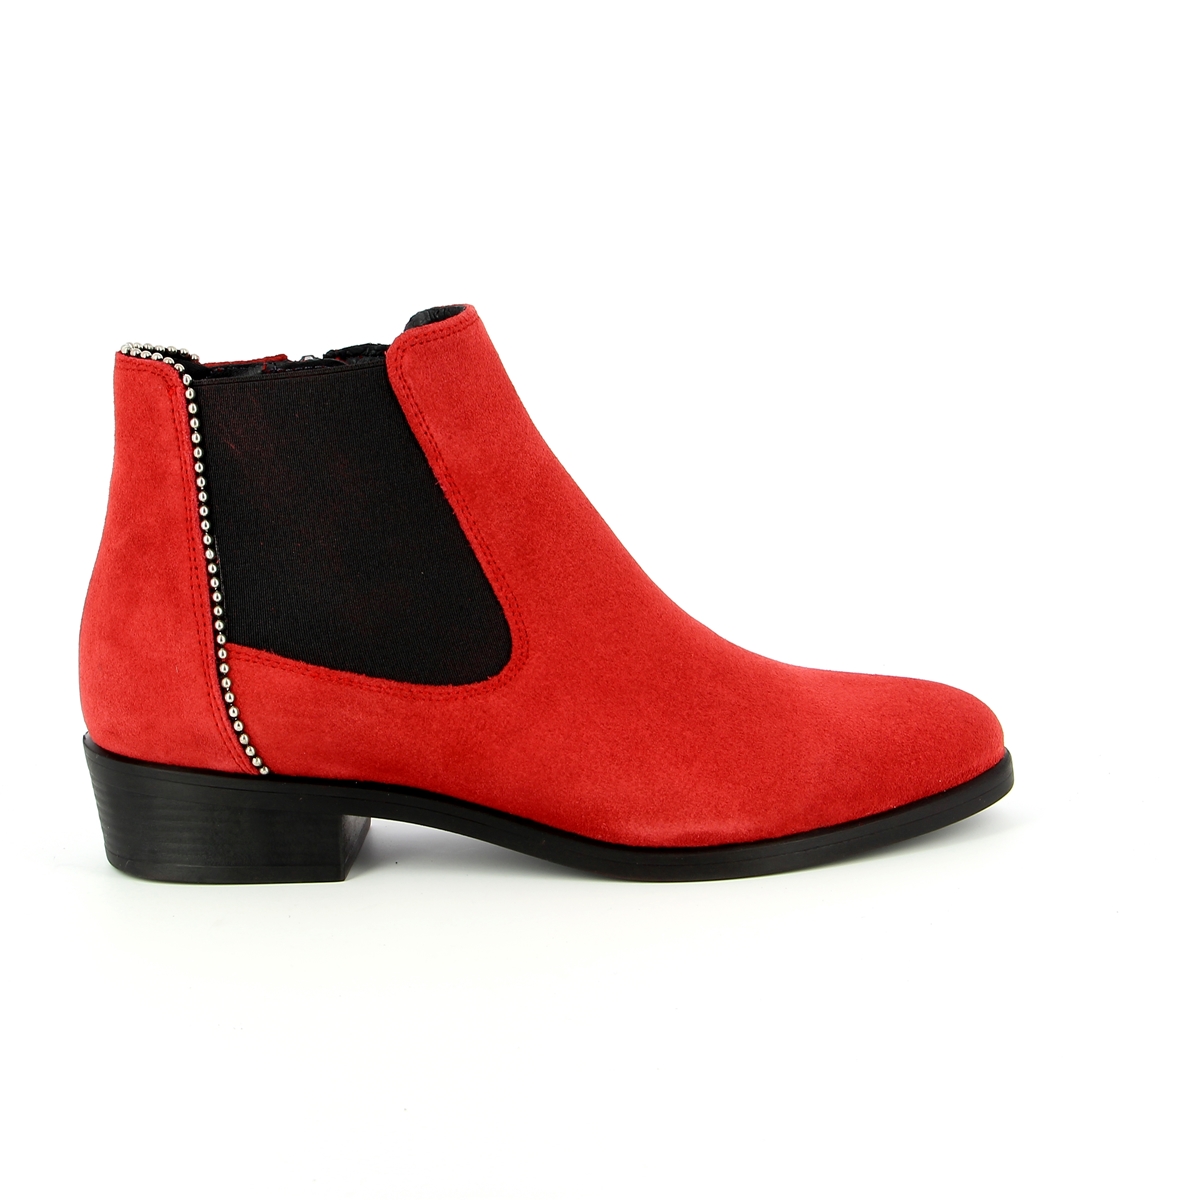 Kanna Boots rouge